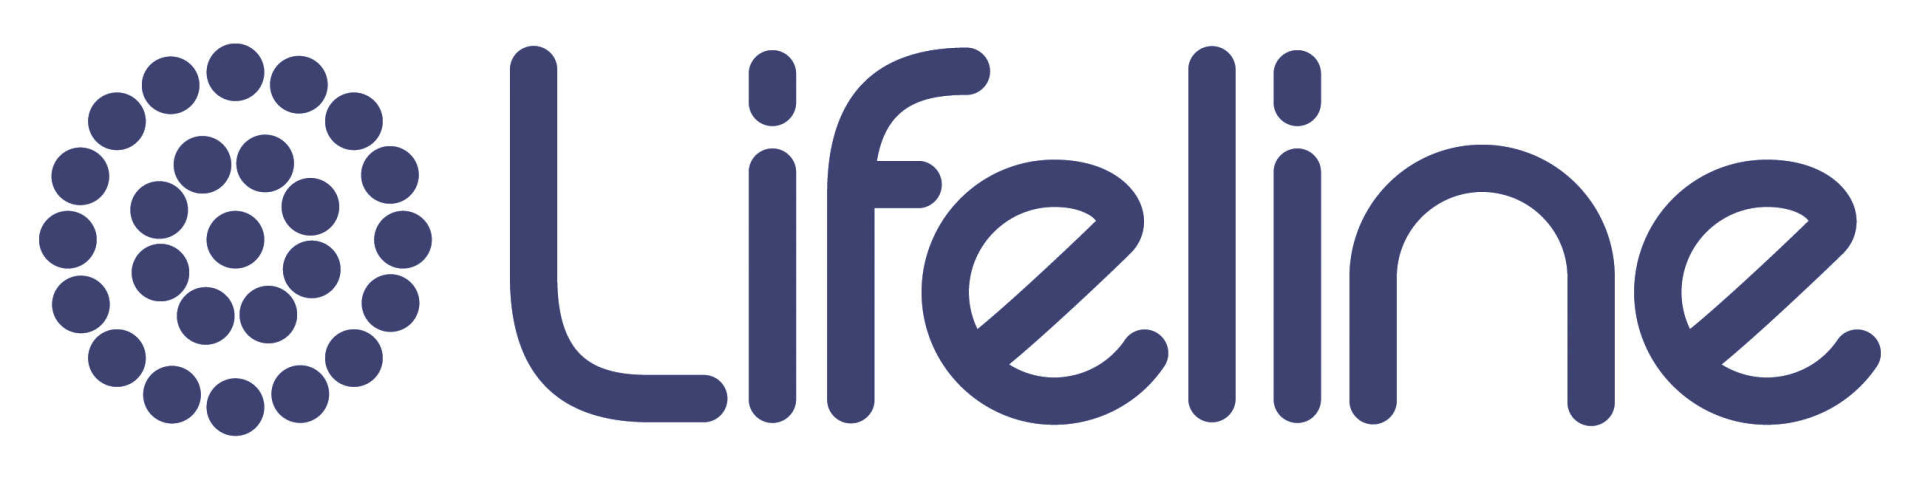 Lifeline logo in blue text